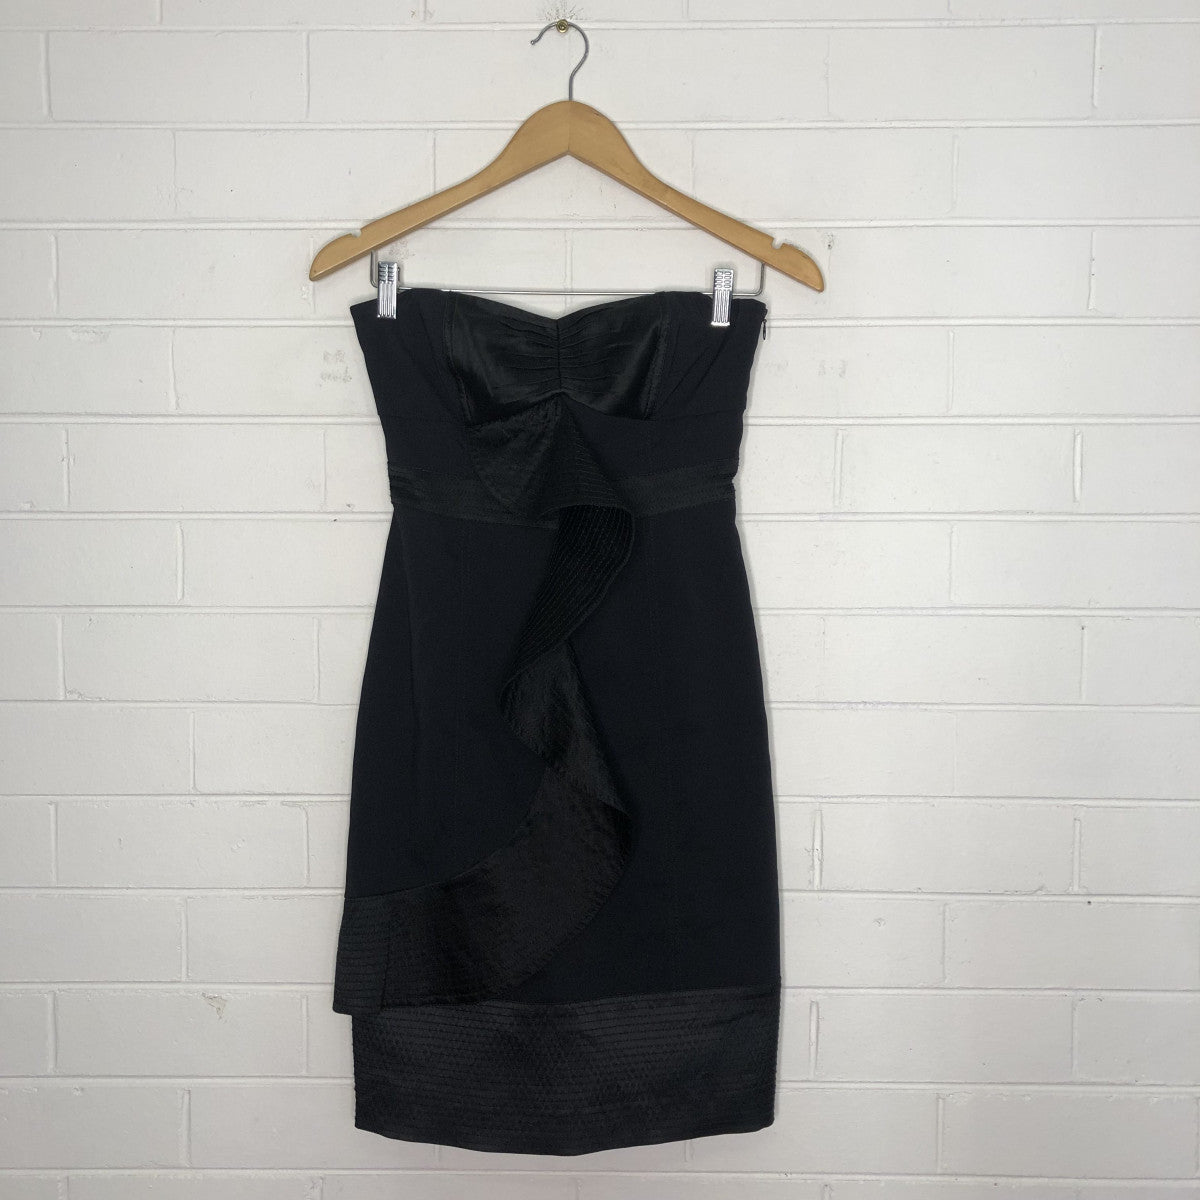 Karen Millen | UK | dress | size 8 | mini length